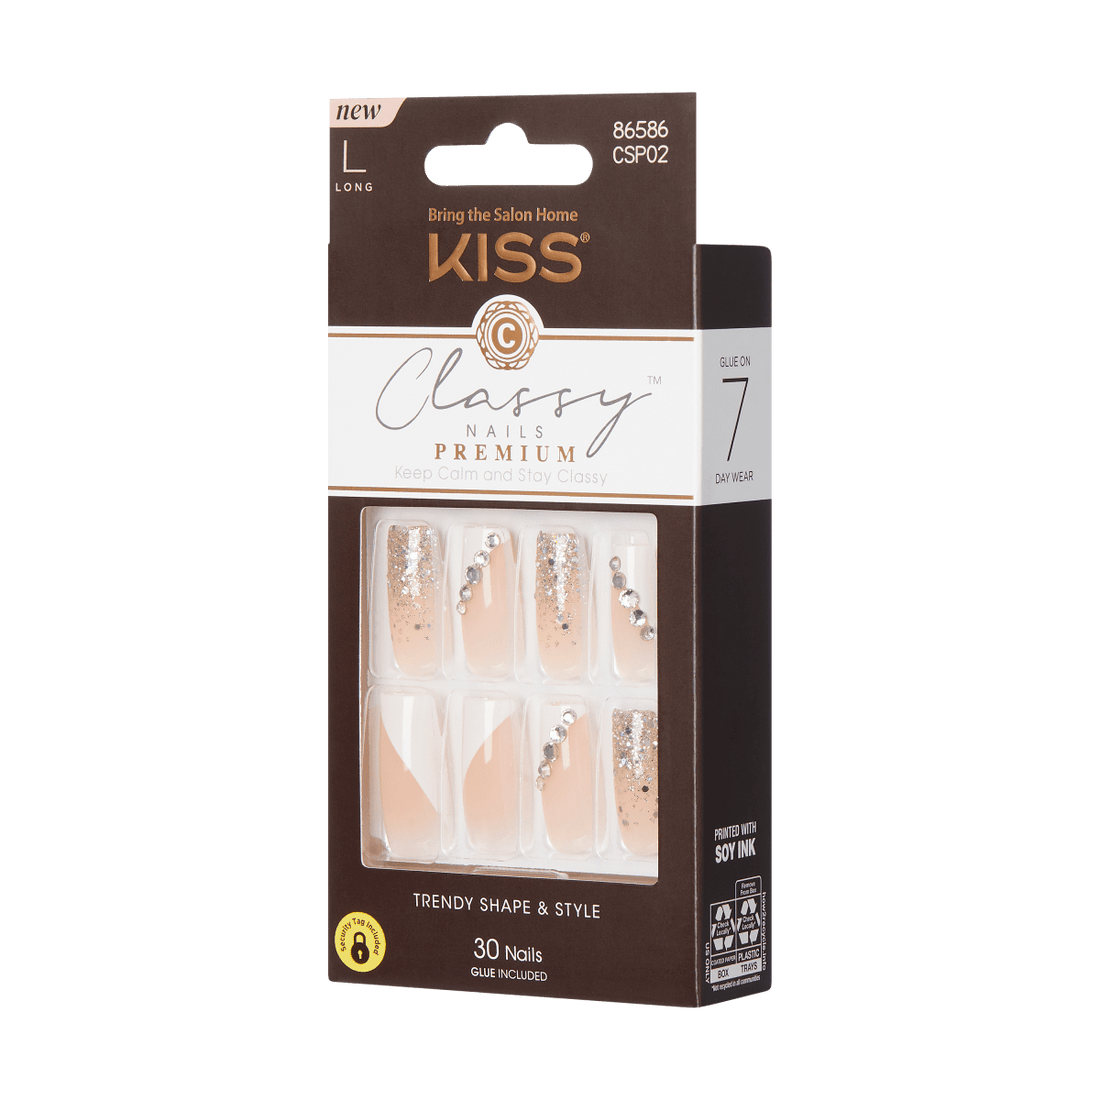 KISS Premium Classy Nails - Gorgeous